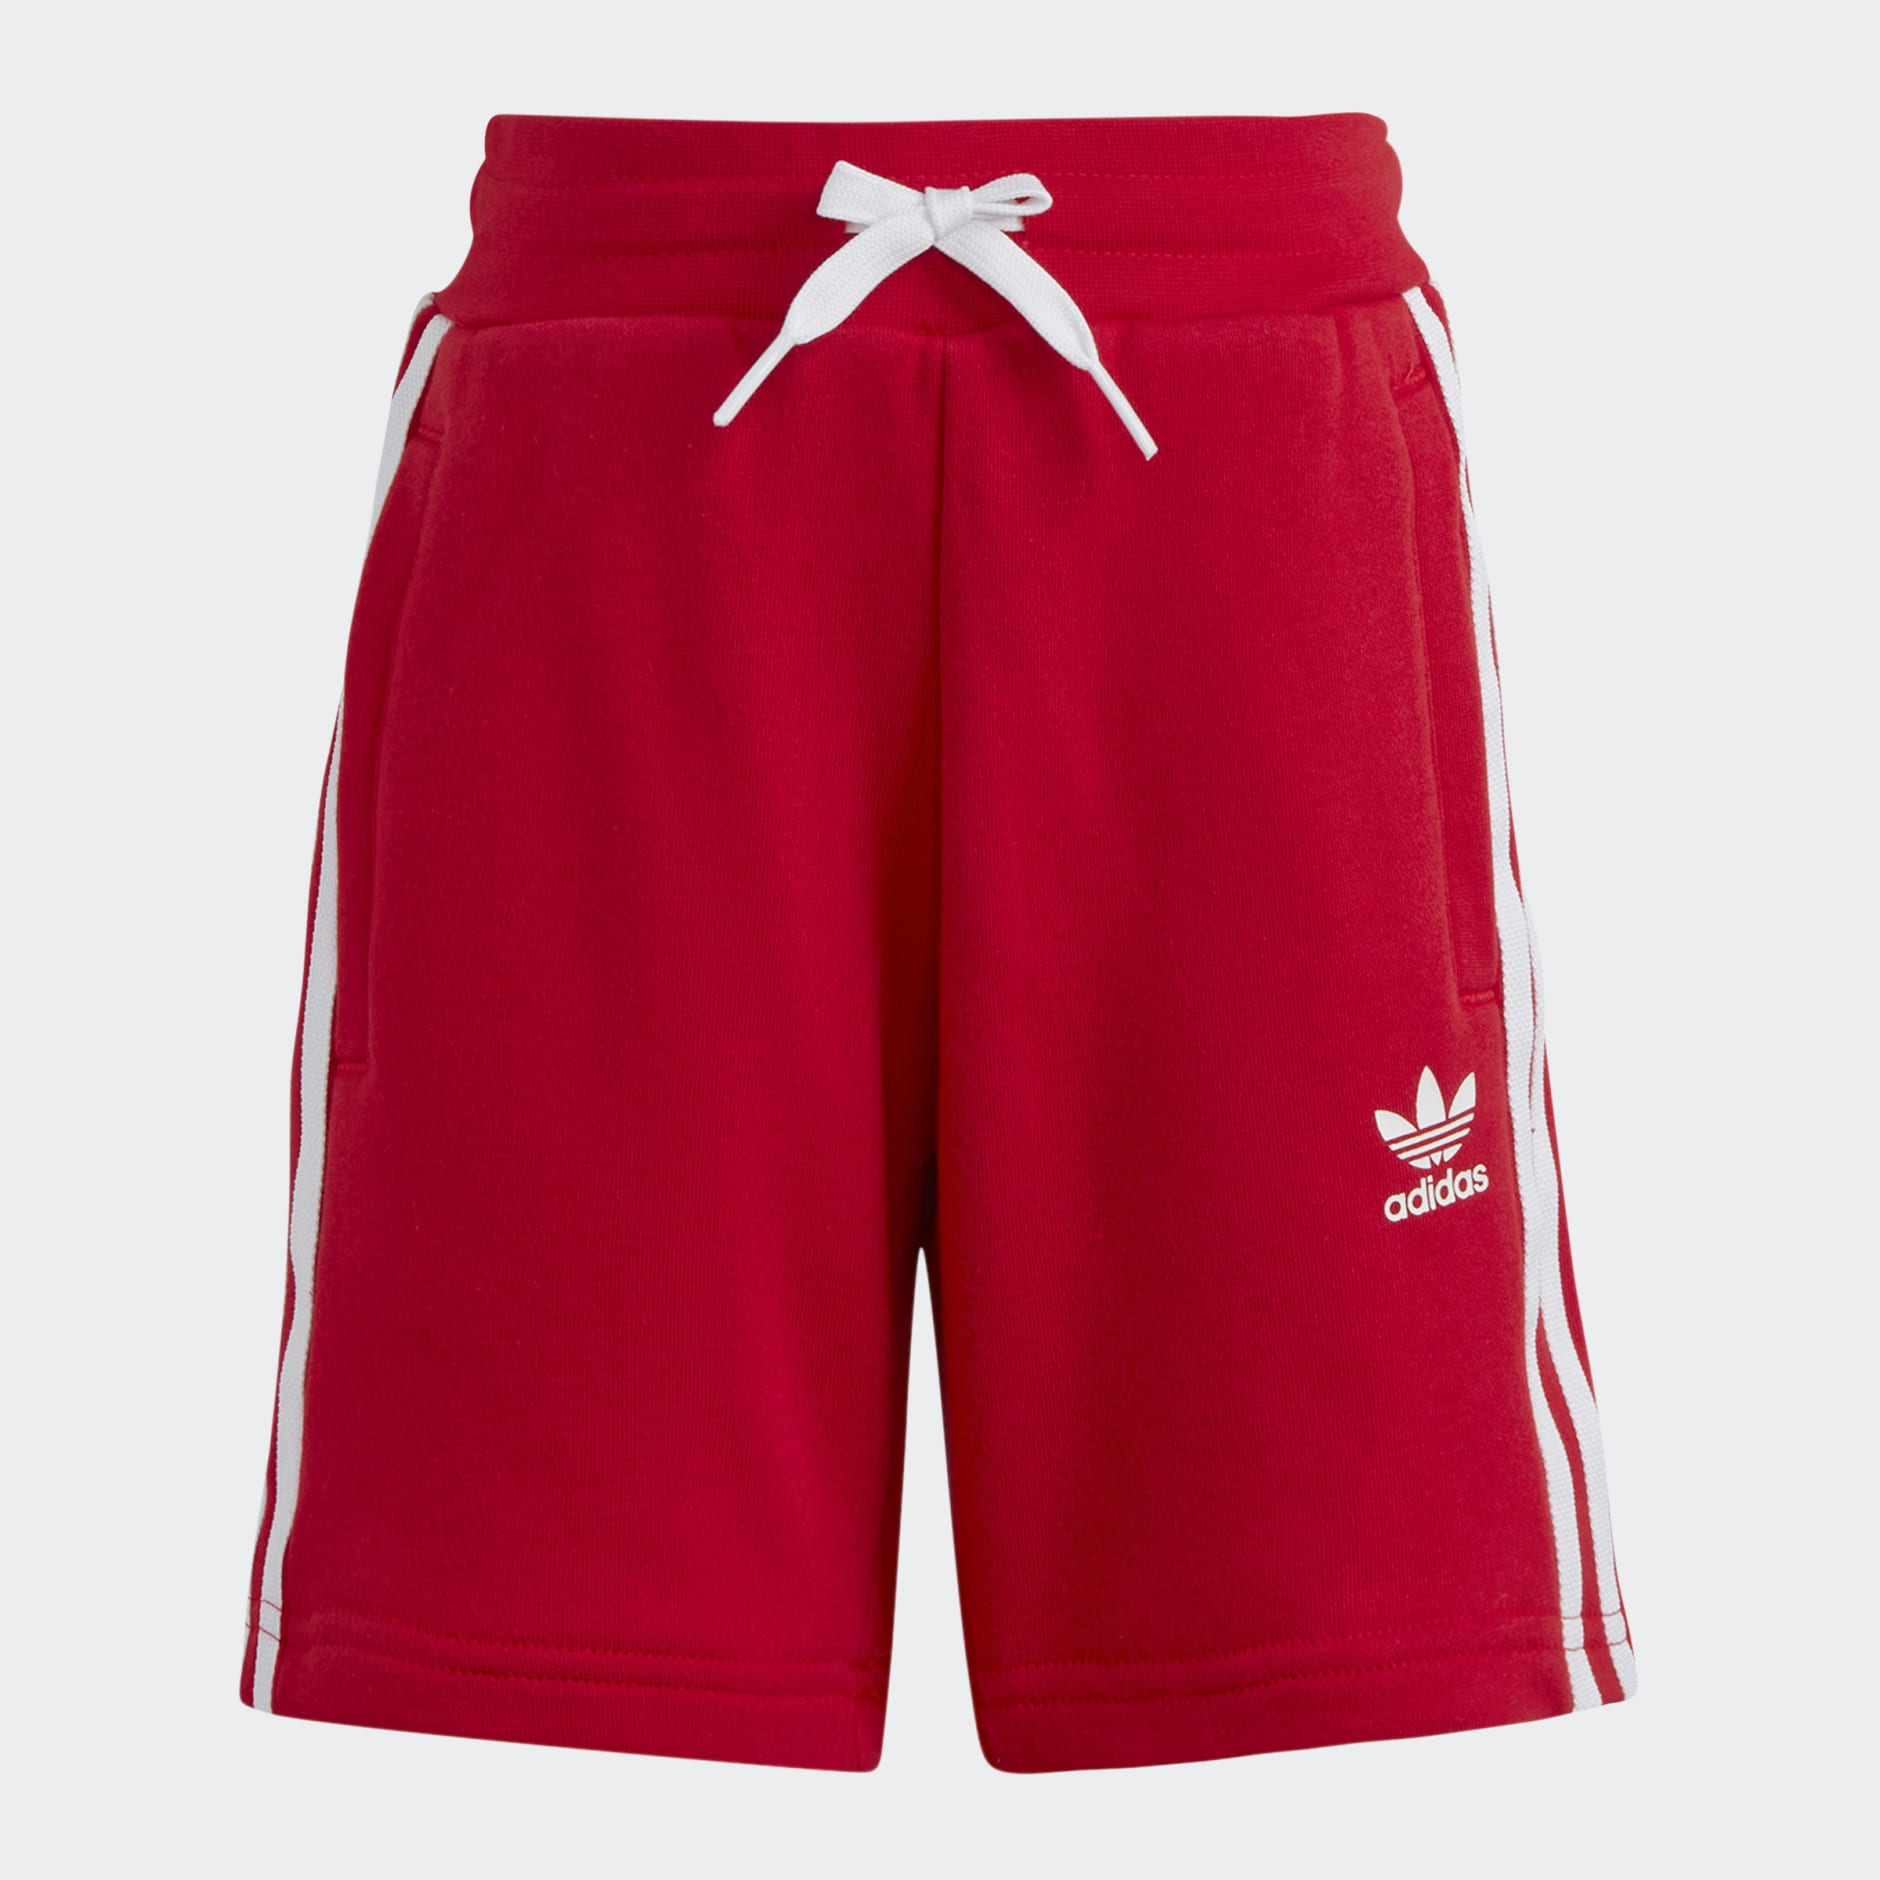 Kids Clothing - Adicolor Shorts and Tee Set - Red | adidas Oman